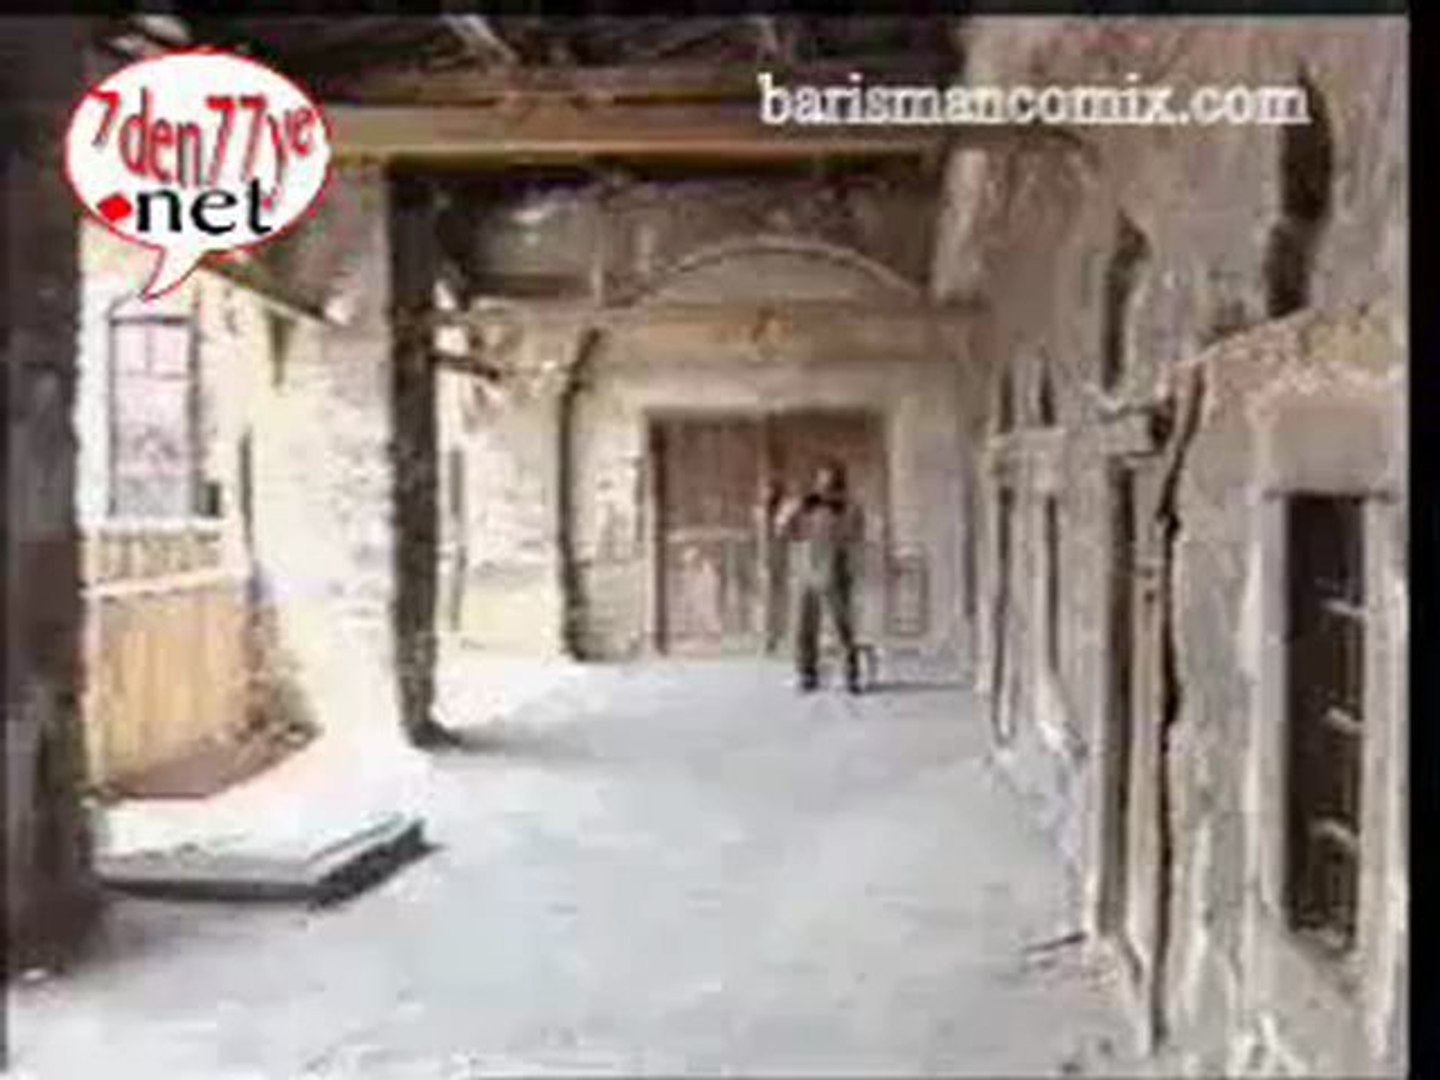 Baris Manco Ahmet Beyin Ceketi - - Dailymotion Video